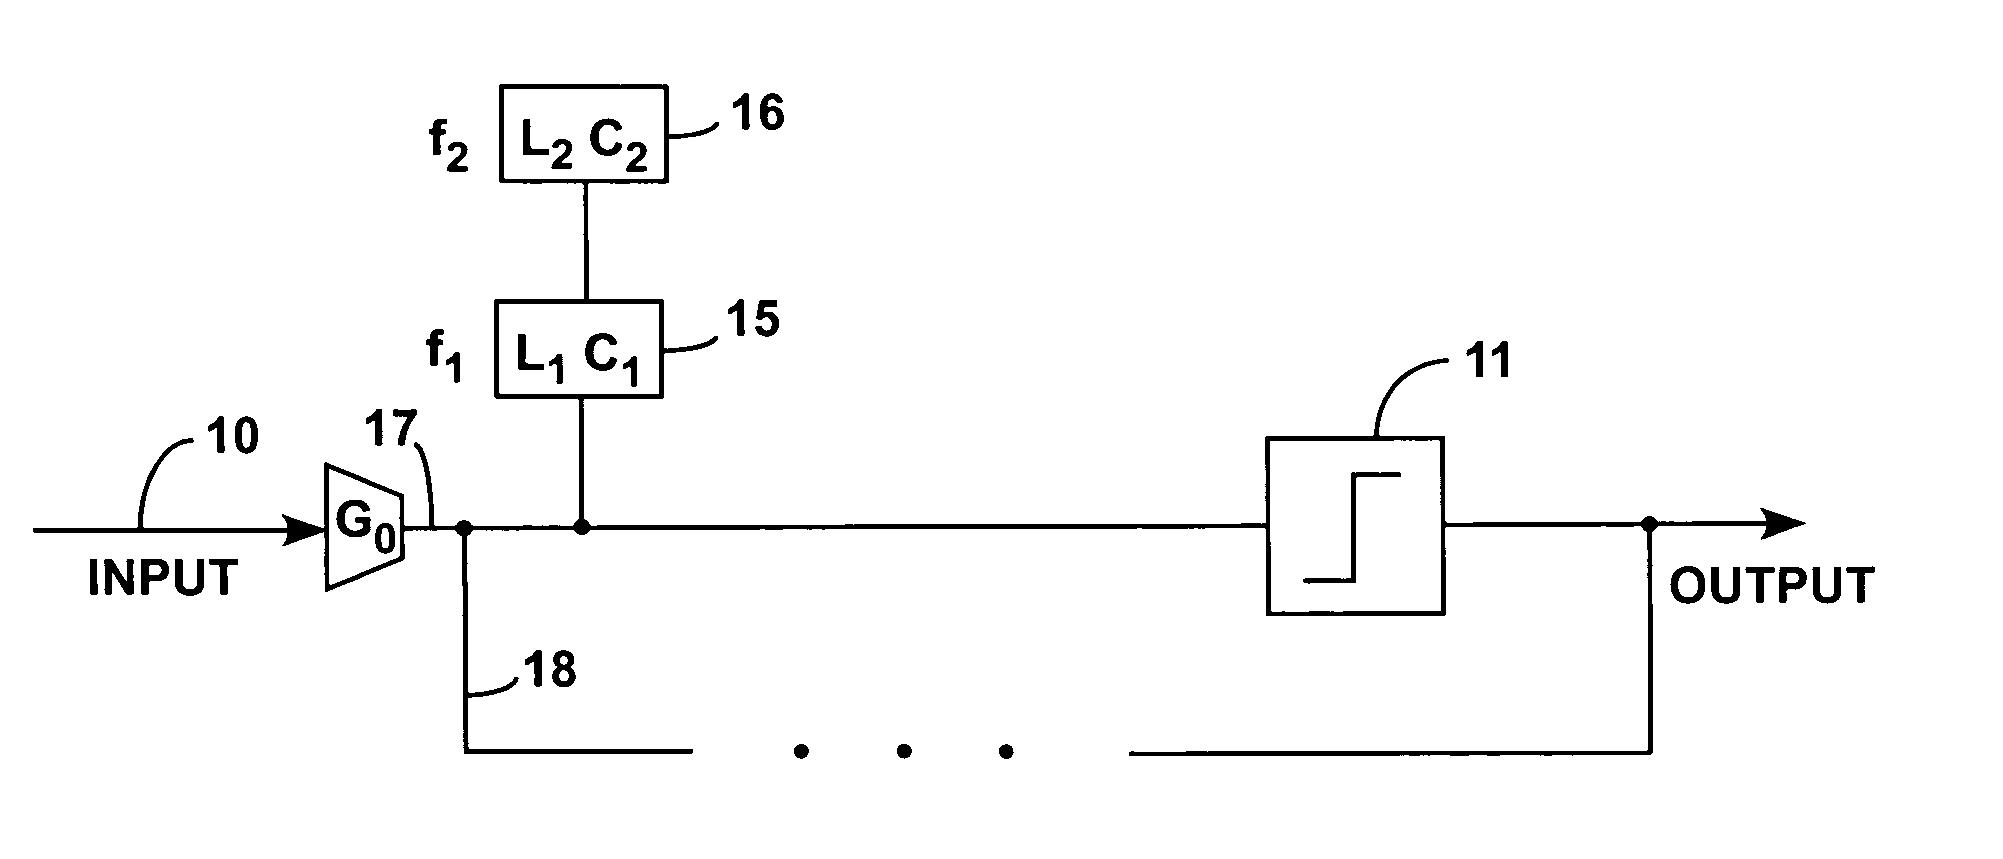 Delta-sigma modulator using LC resonators